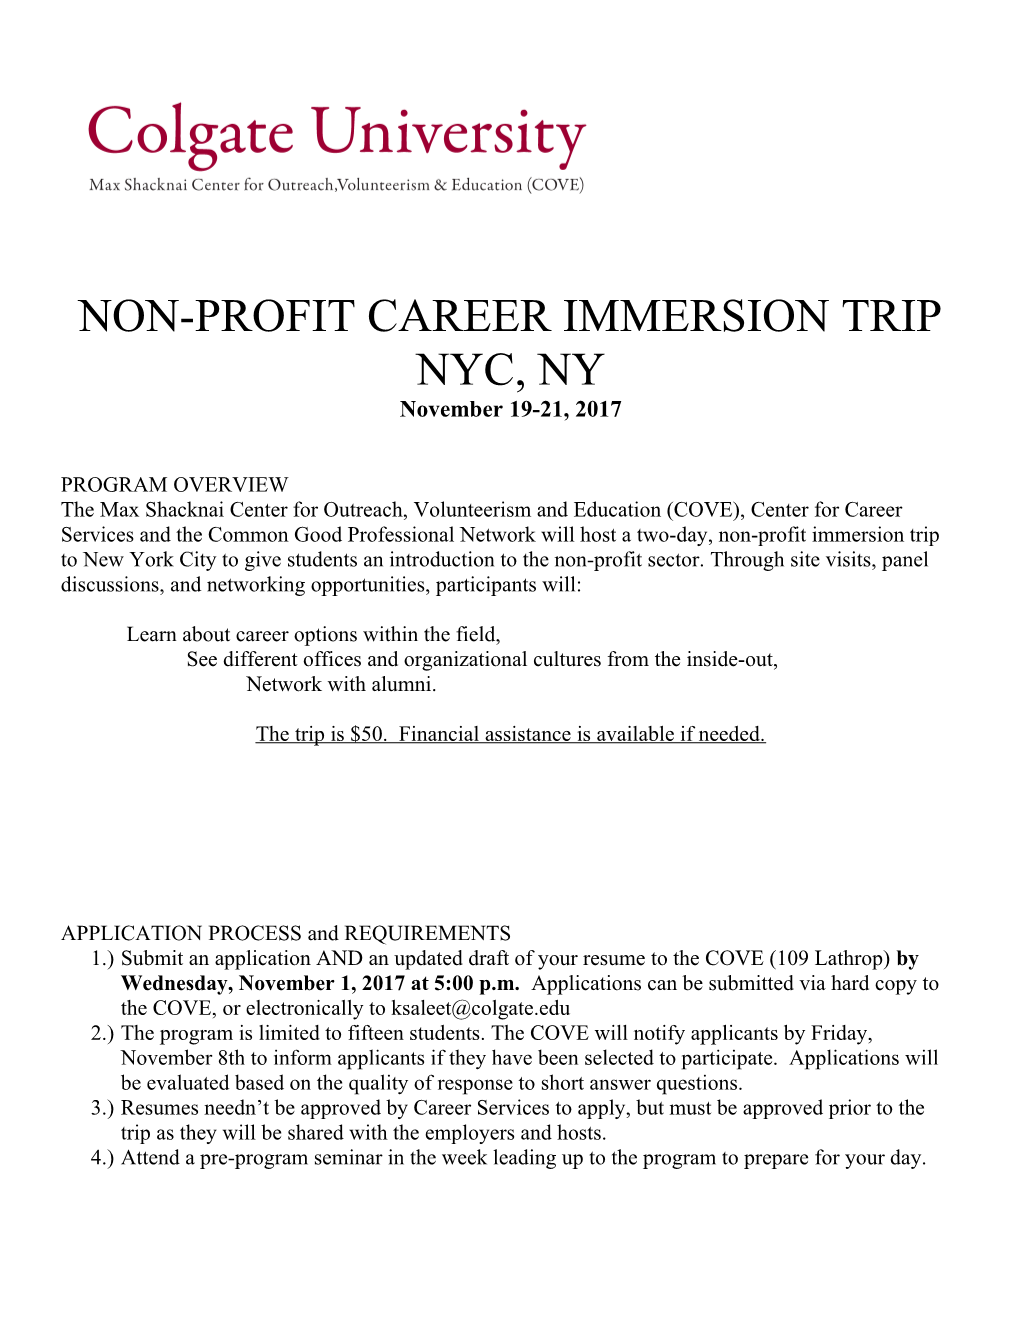 Non-Profit Career Immersion Trip